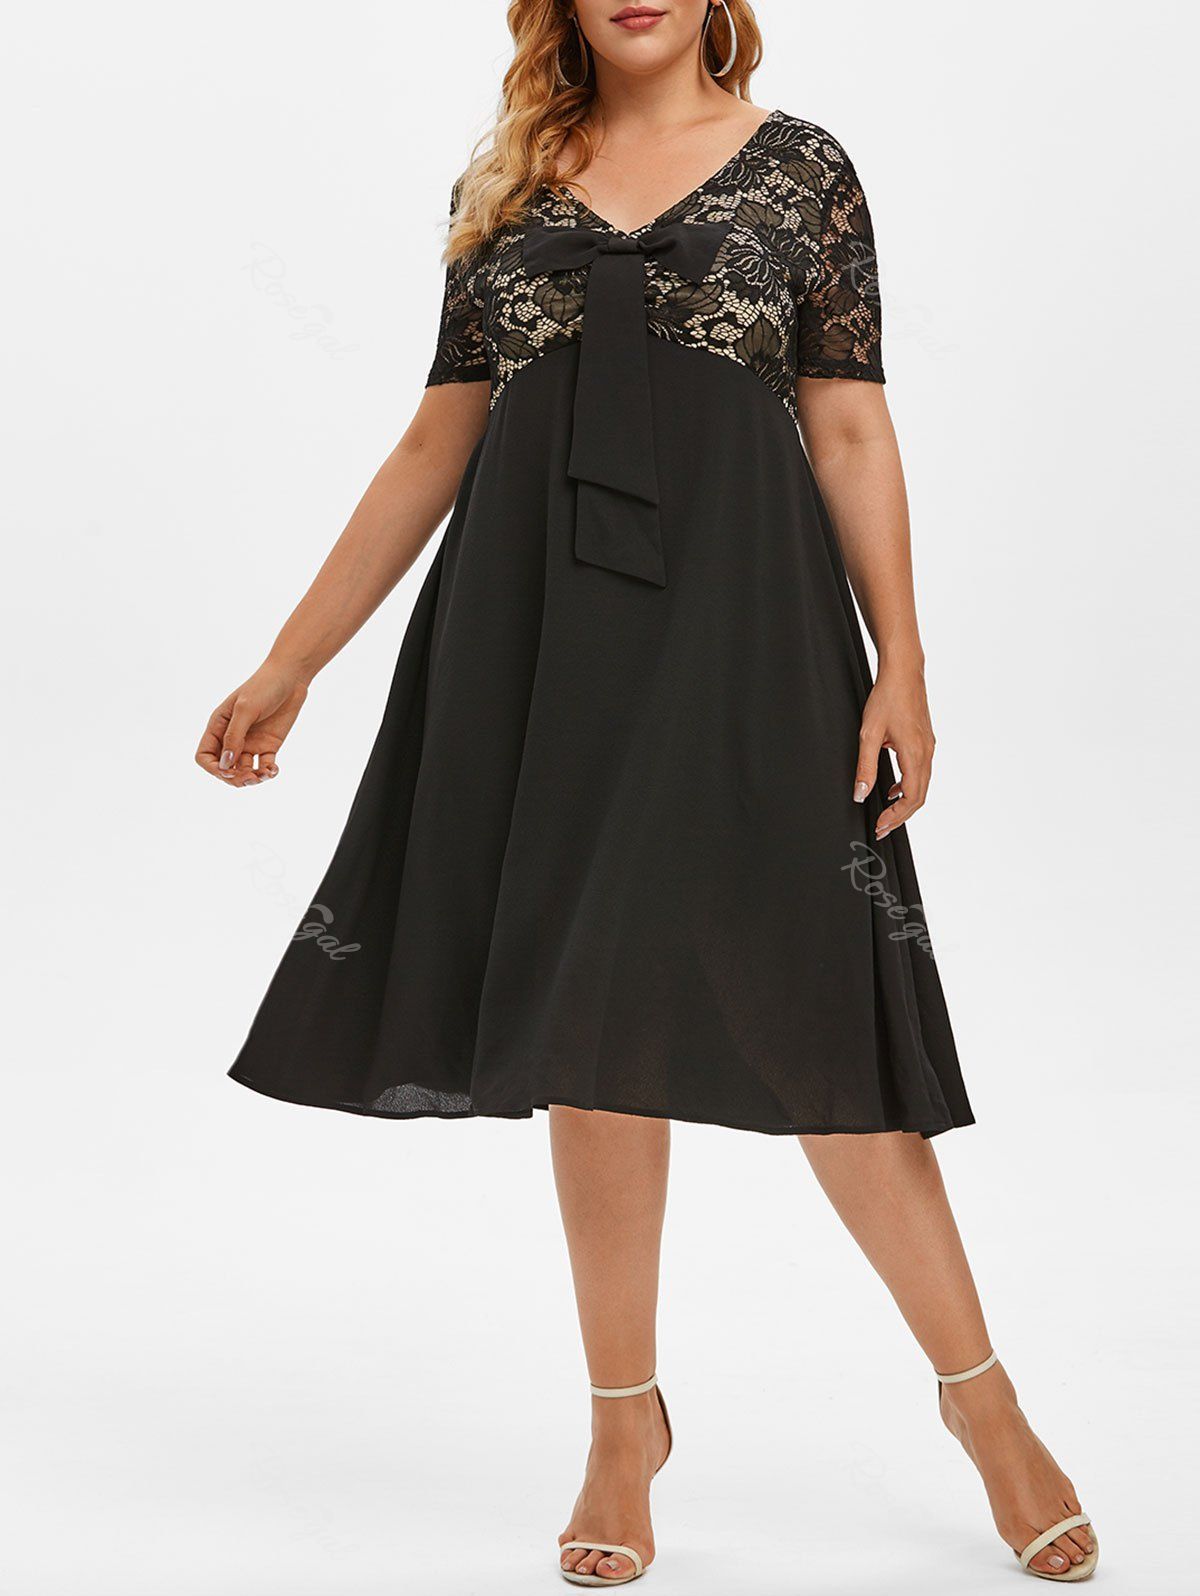 Rosegal Plus Size Lace Insert Bowknot Flare Dress